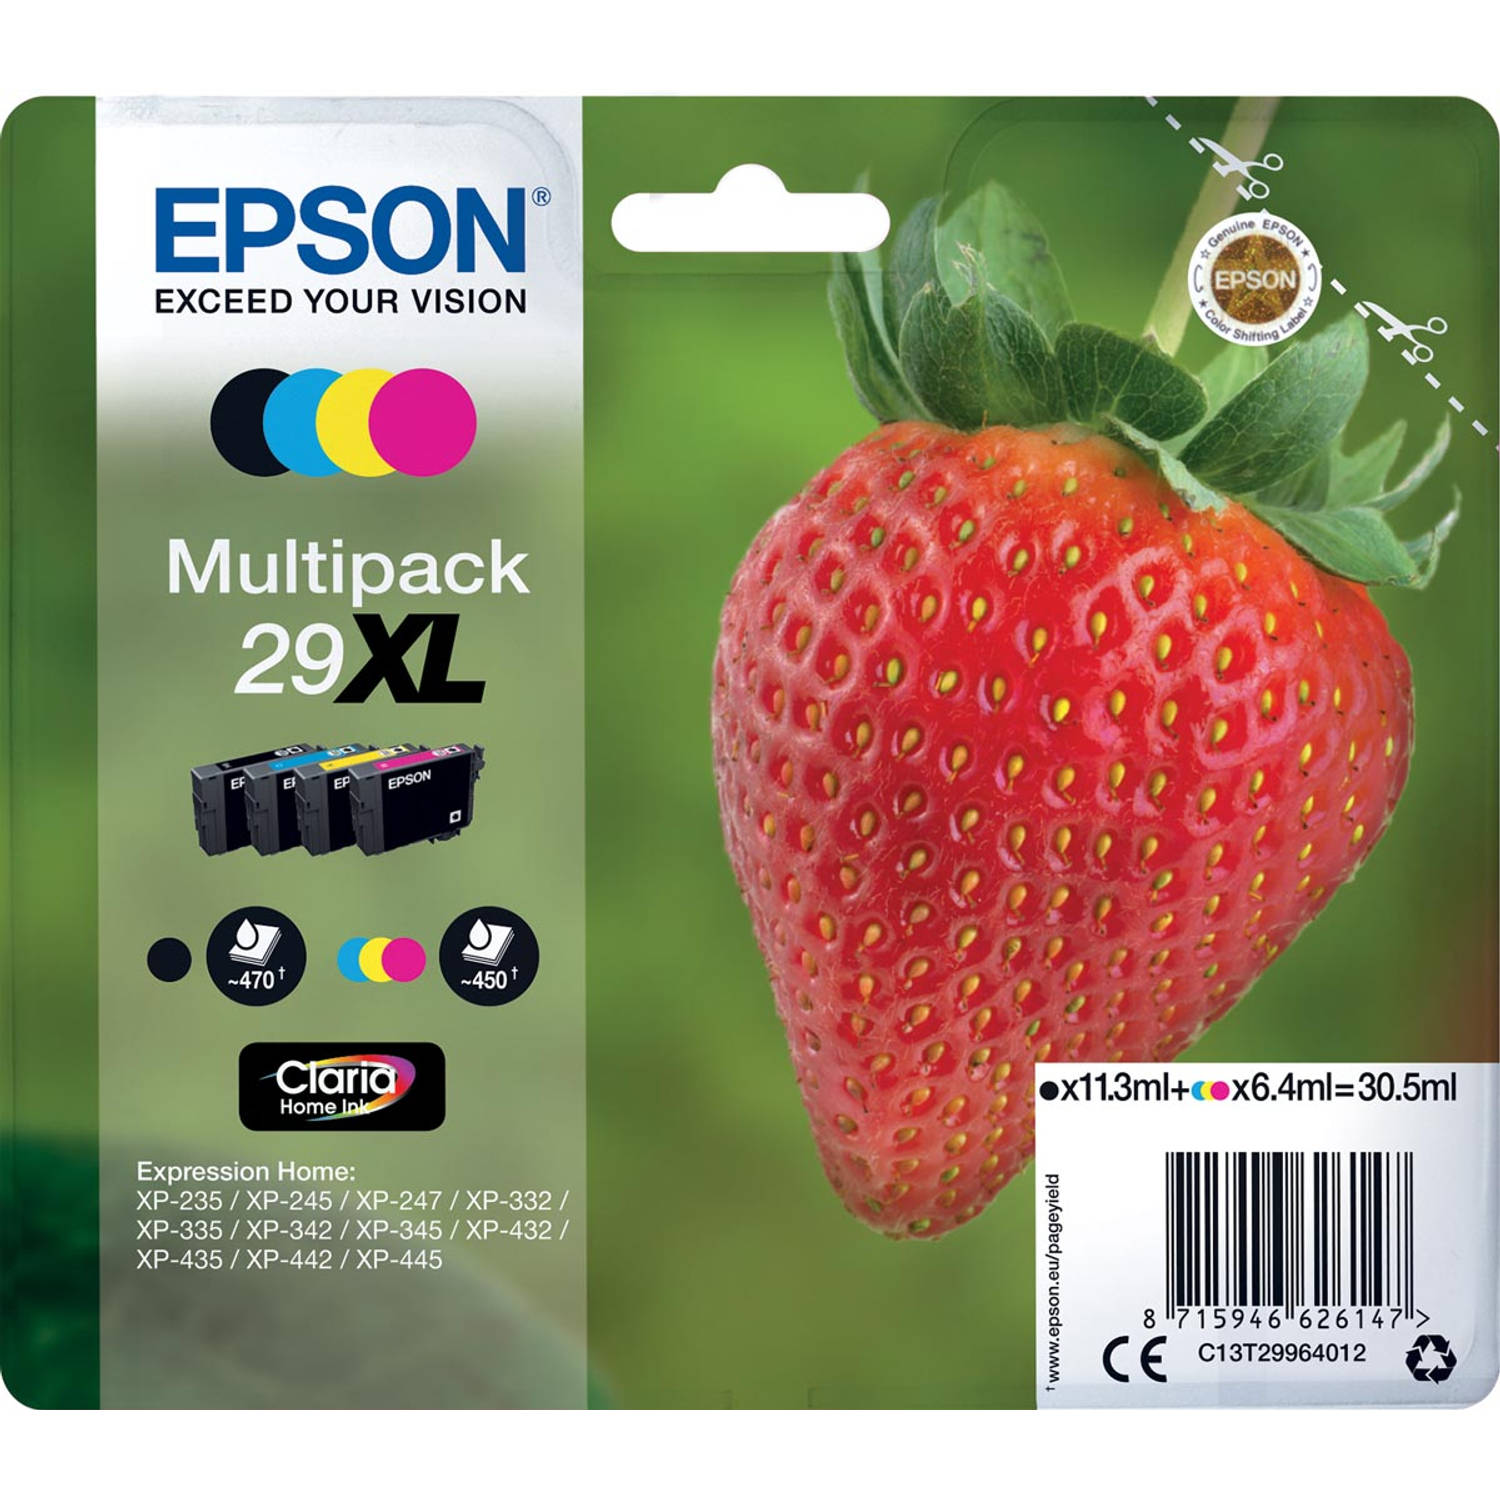 Epson inktcartridge 29XL, 450-470 pagina&apos;s, OEM C13T29964012, 4 kleuren 8 stuks